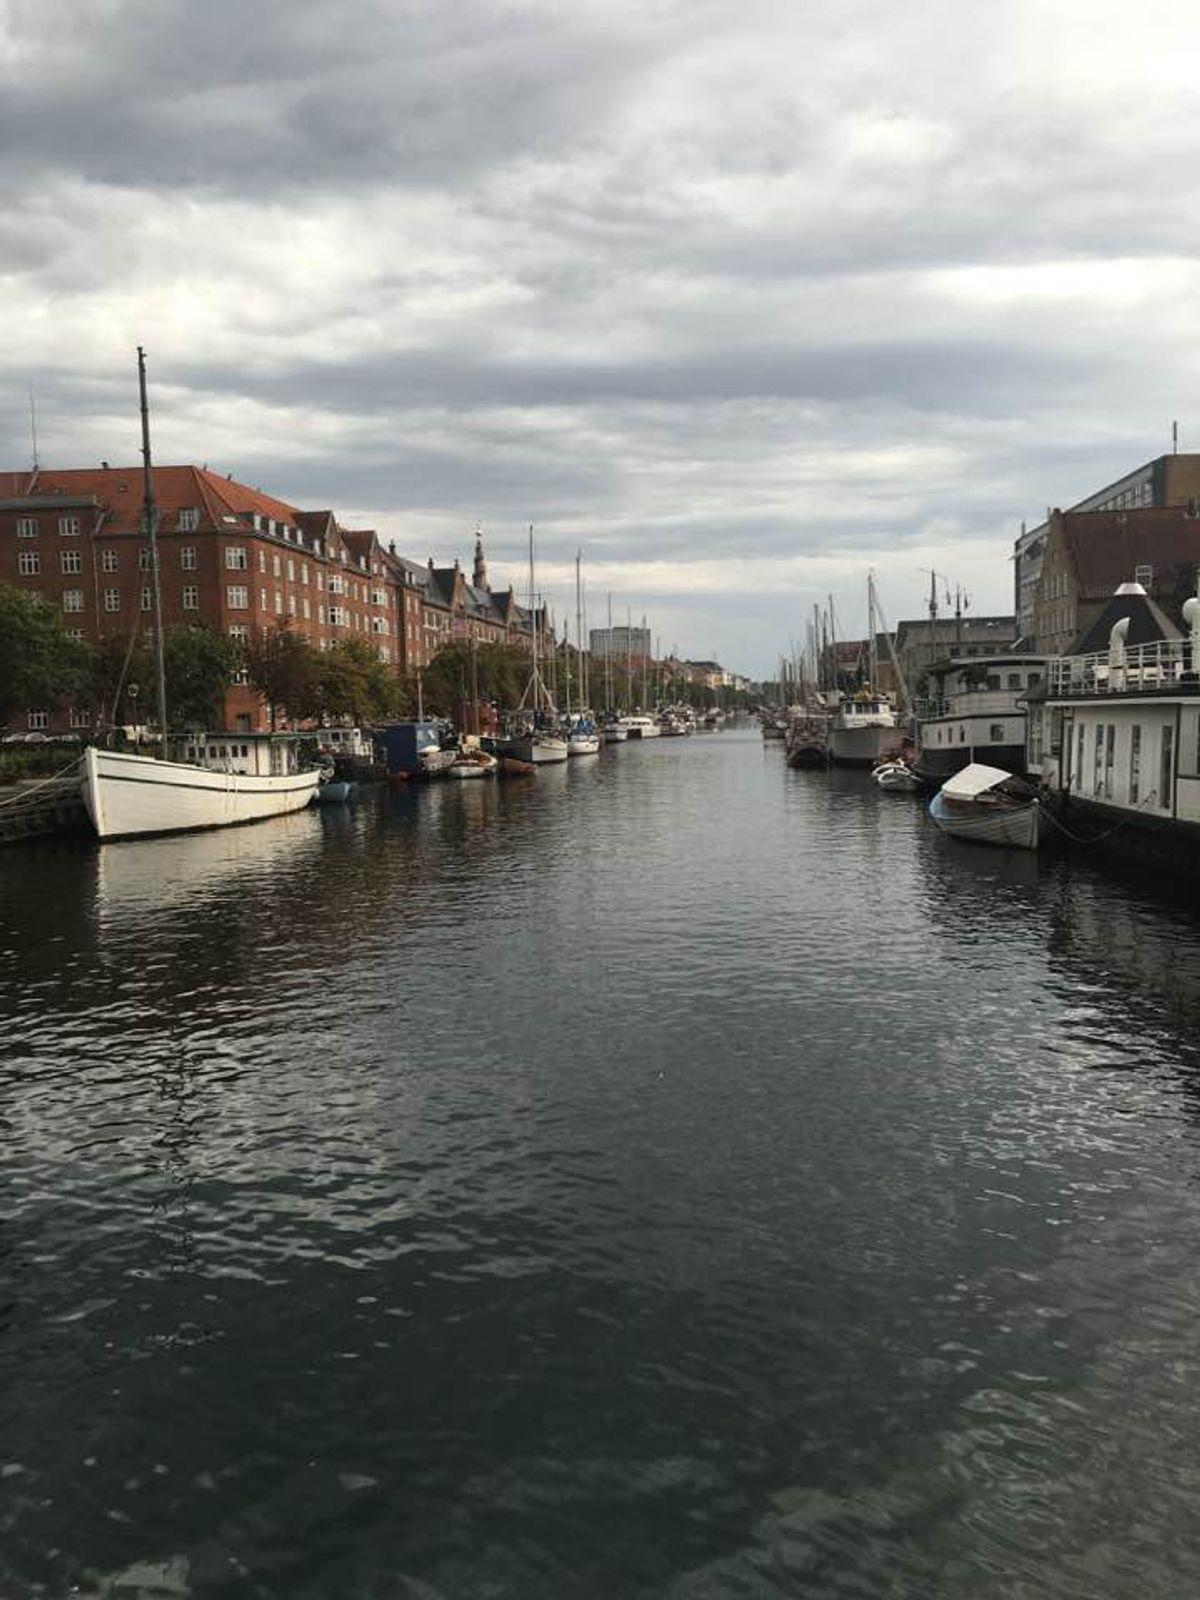 Hygge: The Essence Of Copenhagen